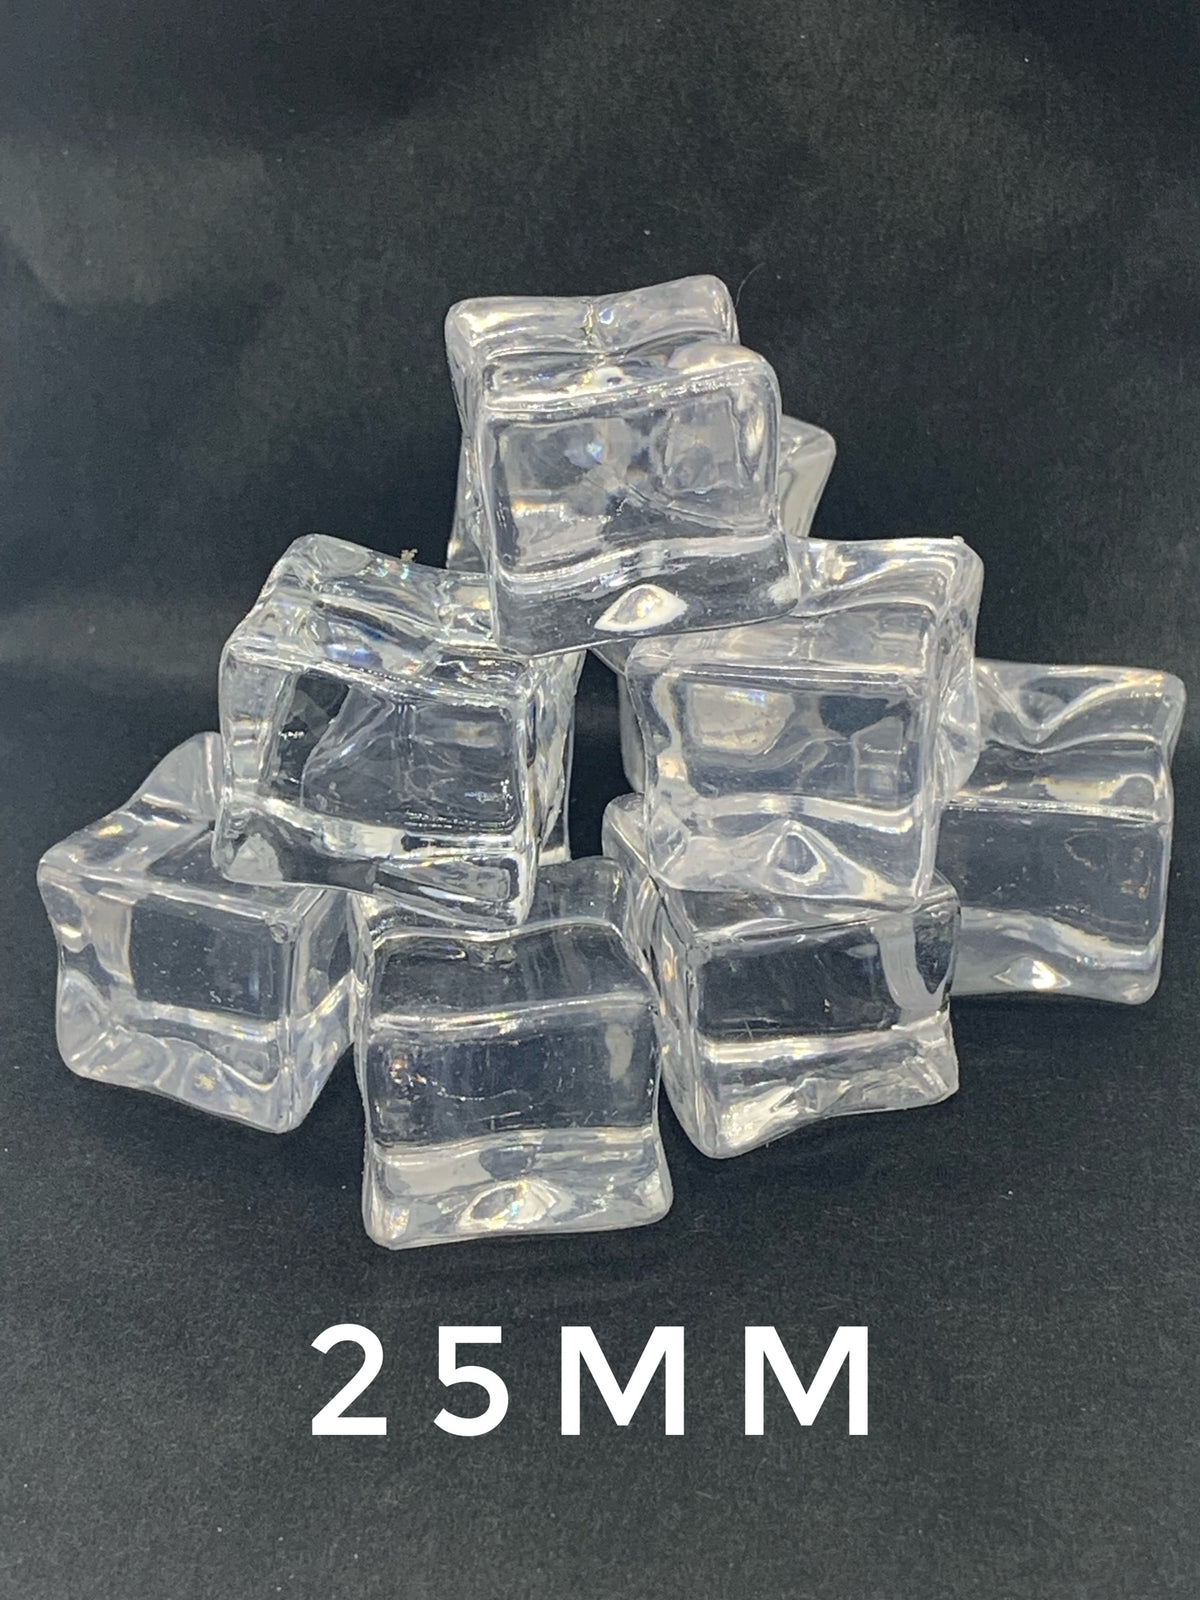 25mm Ice Cubes